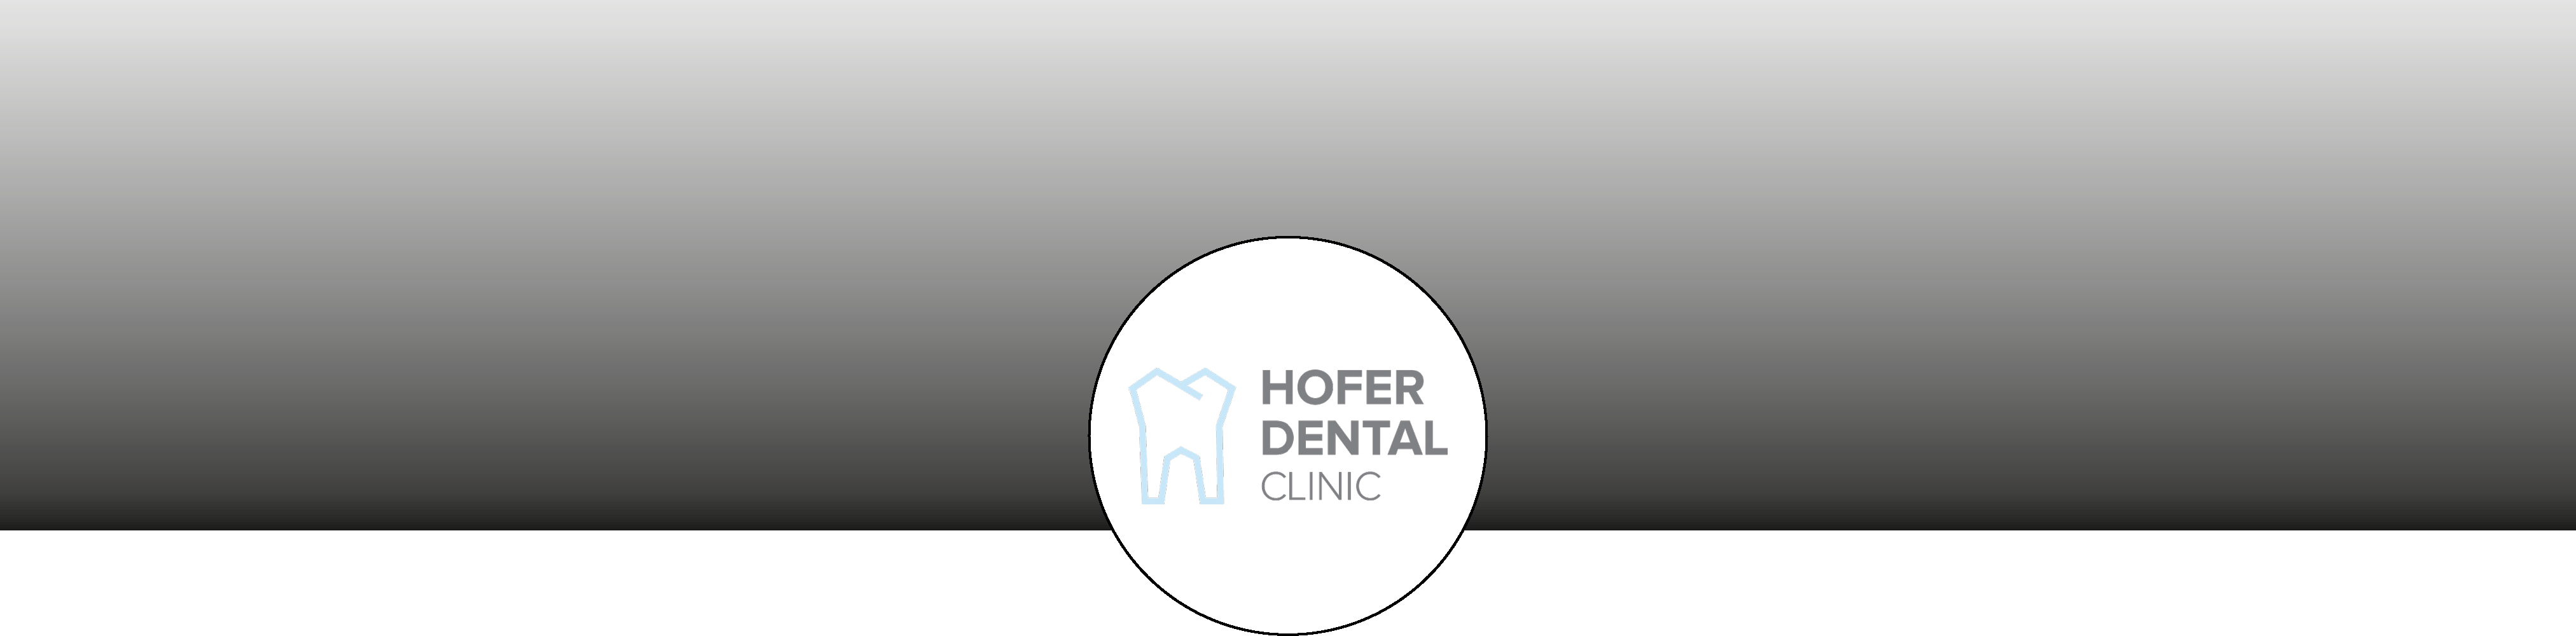 banner_hofer-dental